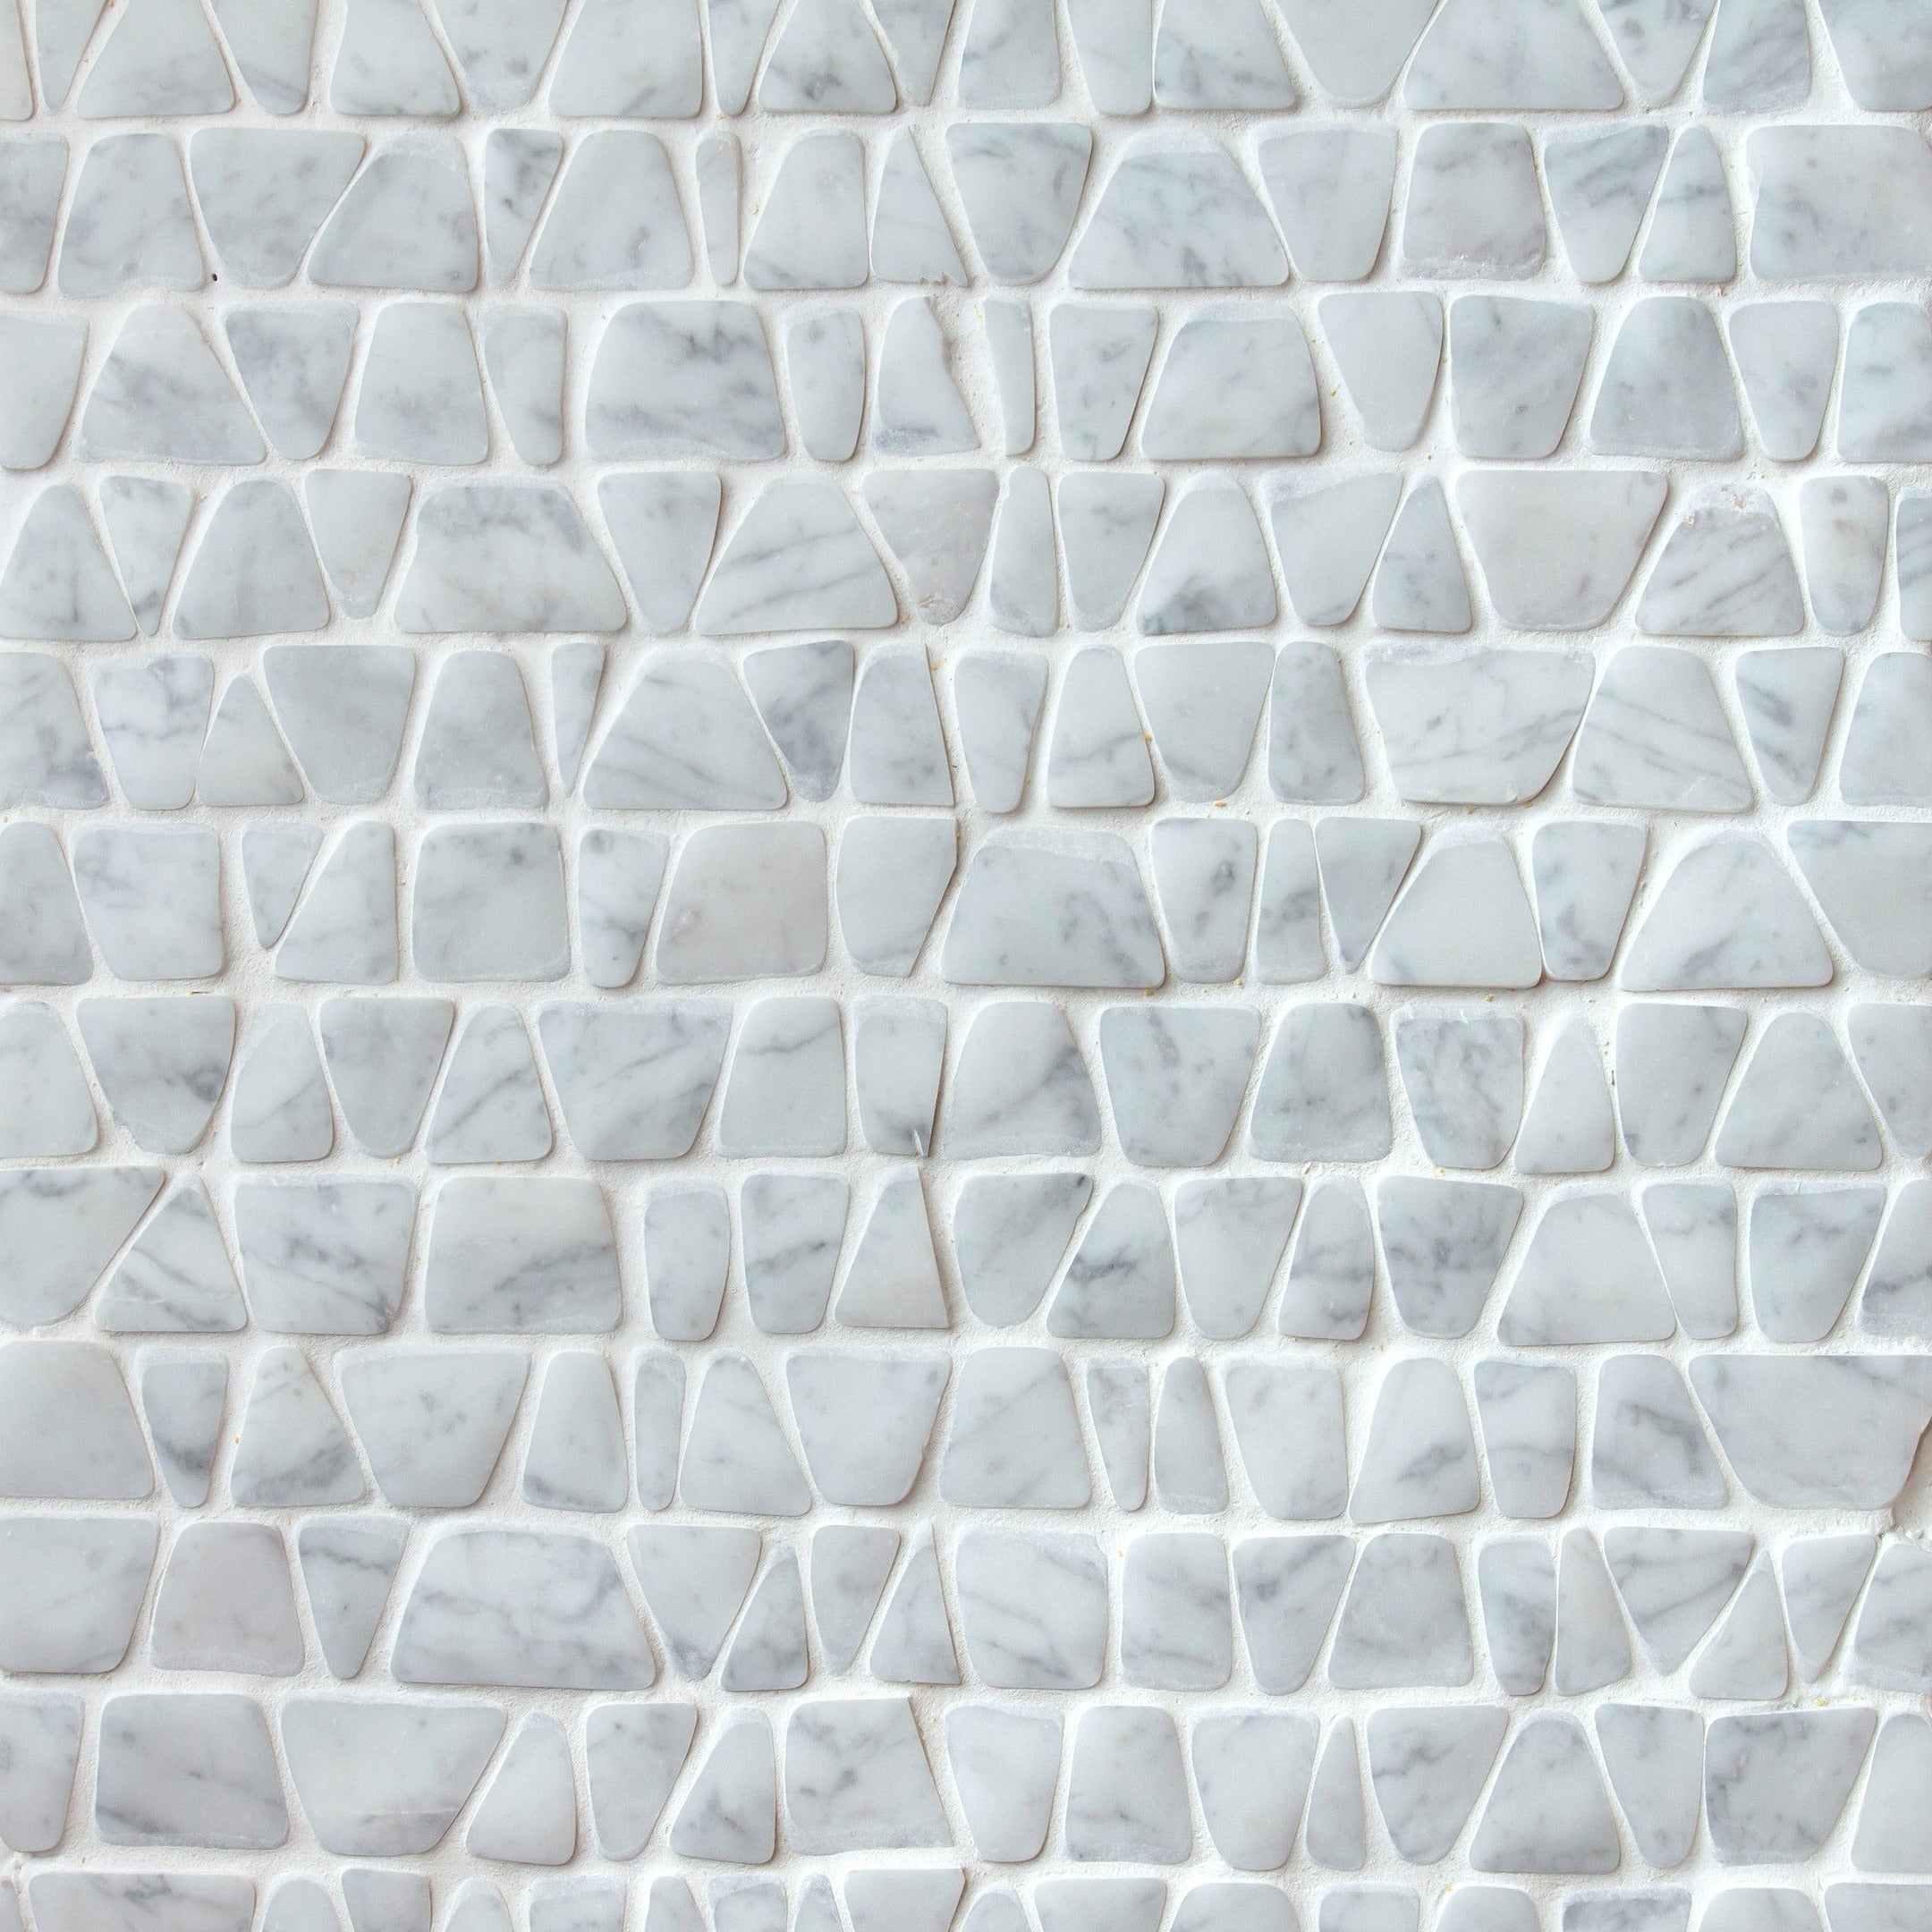 giovanni barbieri timeworn carrara natural white marble irregular handcut pattern mosaic distributed by surface group international